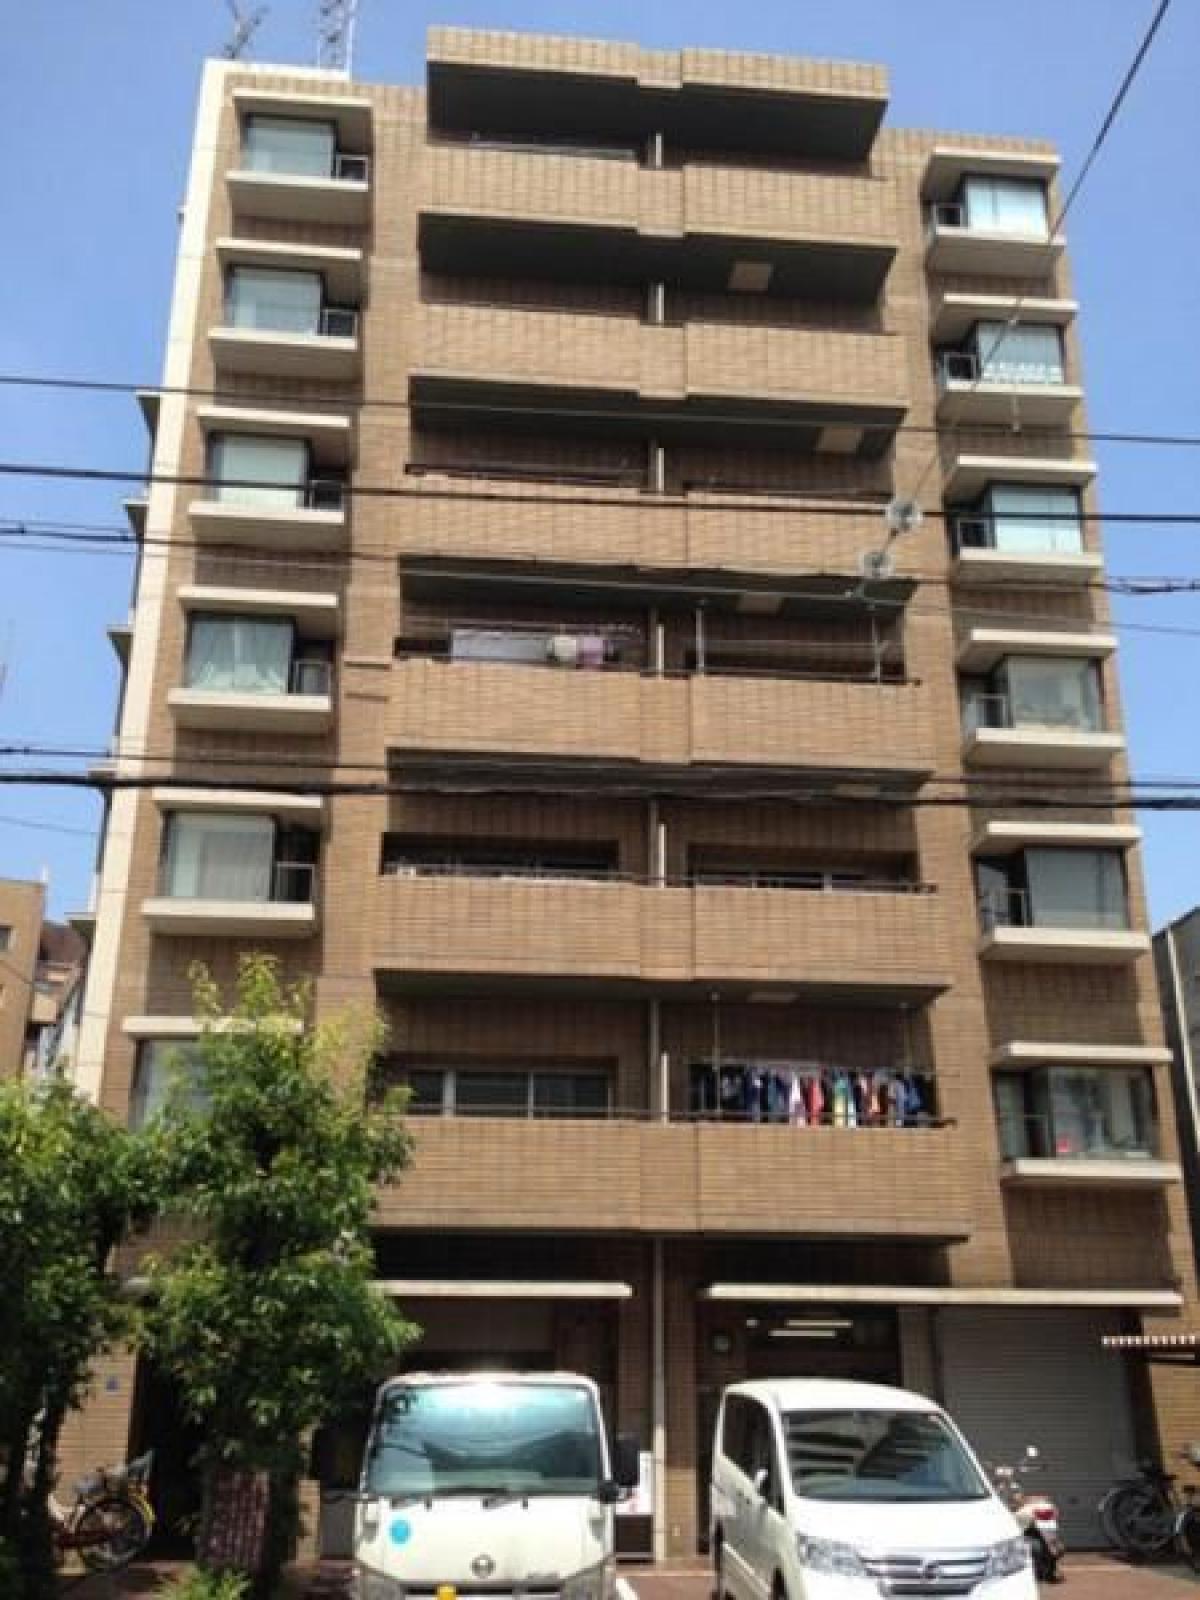 Picture of Apartment For Sale in Osaka Shi Nishinari Ku, Osaka, Japan